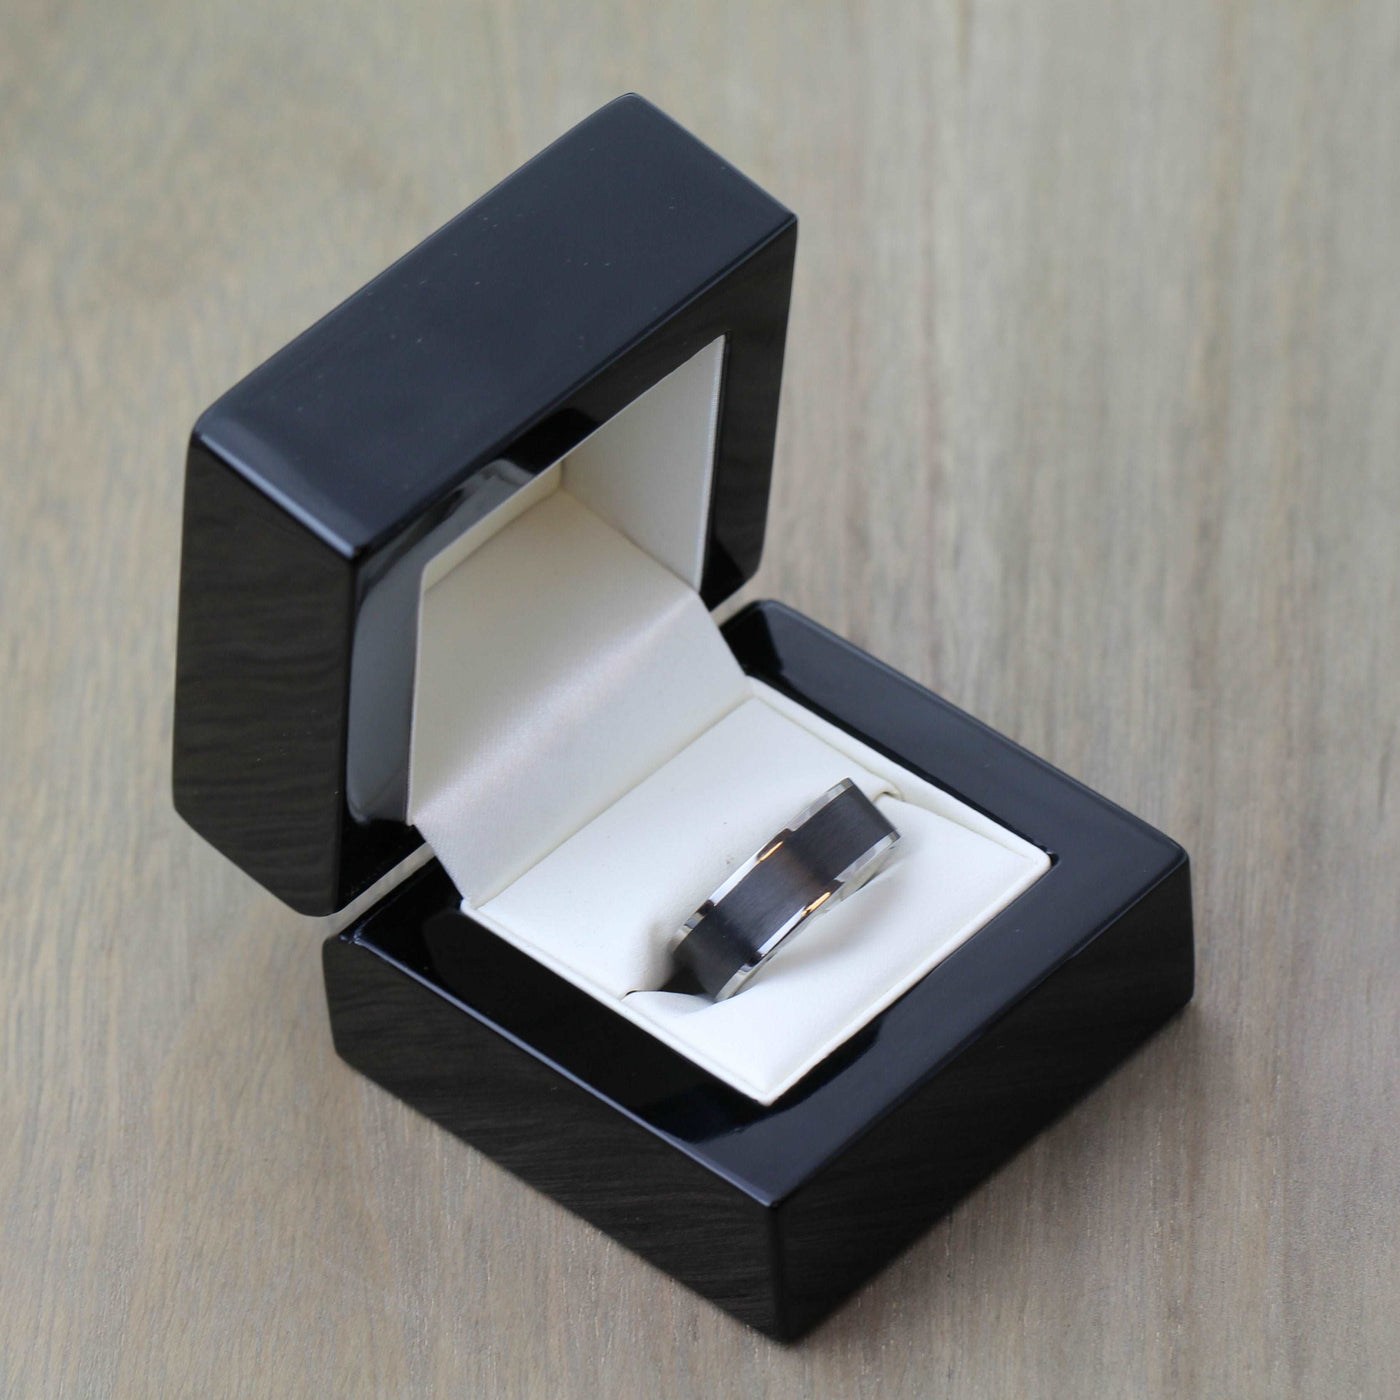 Titanium & Carbon Fibre Wedding/Engagement Ring with FREE engraving! 4 & 5mm